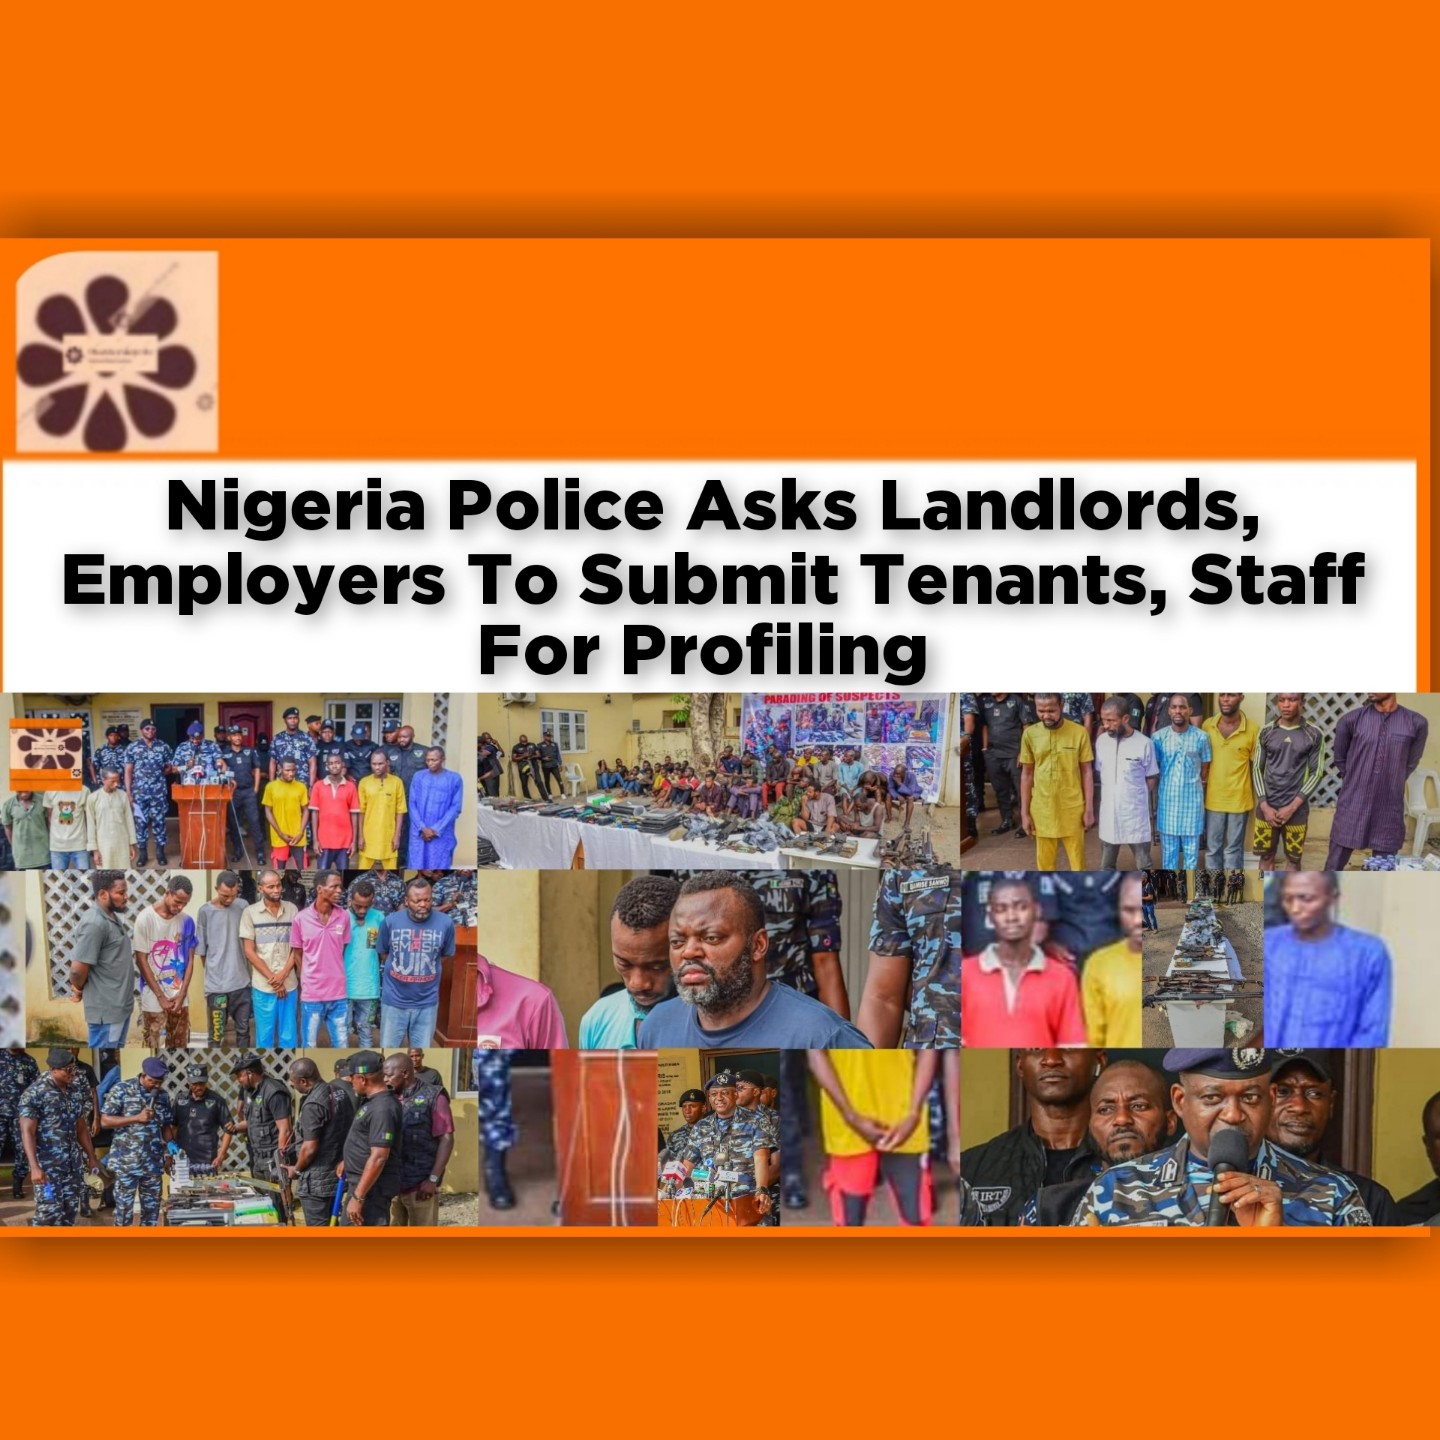 Nigeria Police Asks Landlords, Employers To Submit Tenants, Staff For Profiling ~ OsazuwaAkonedo #God